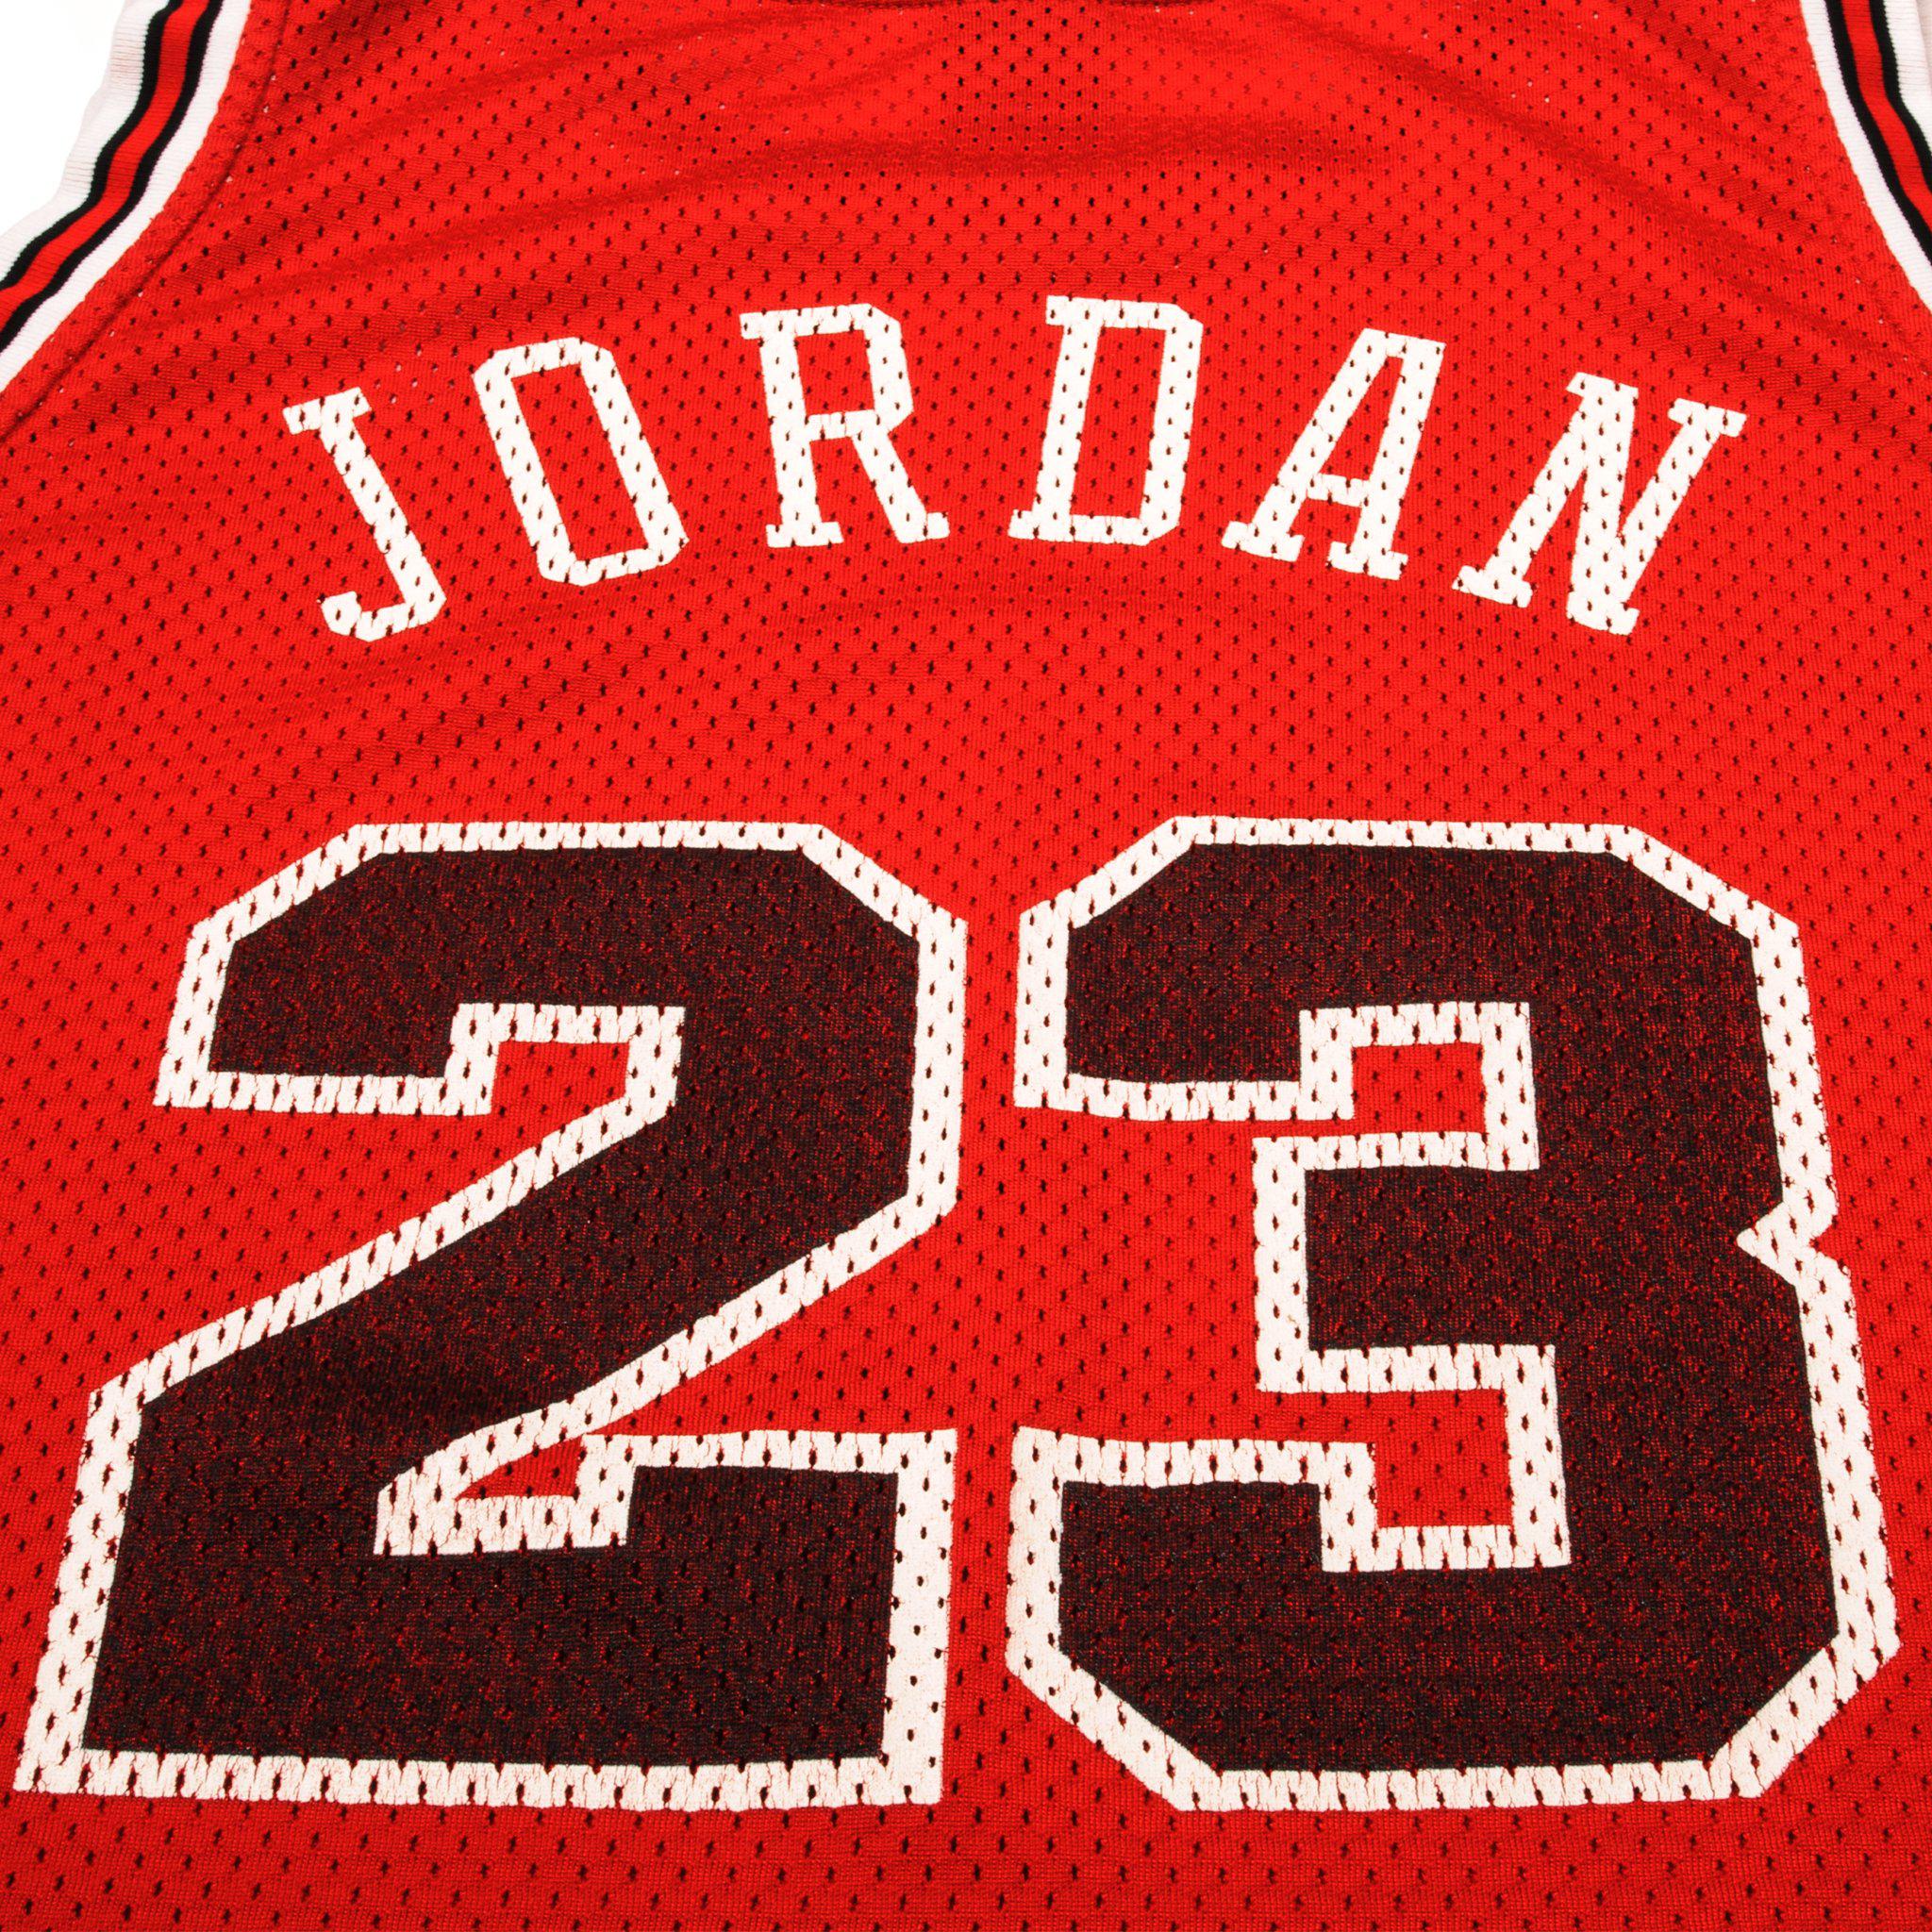 Rare Authentic Vintage Nike NBA Chicago Bulls Michael Jordan #45 Jersey